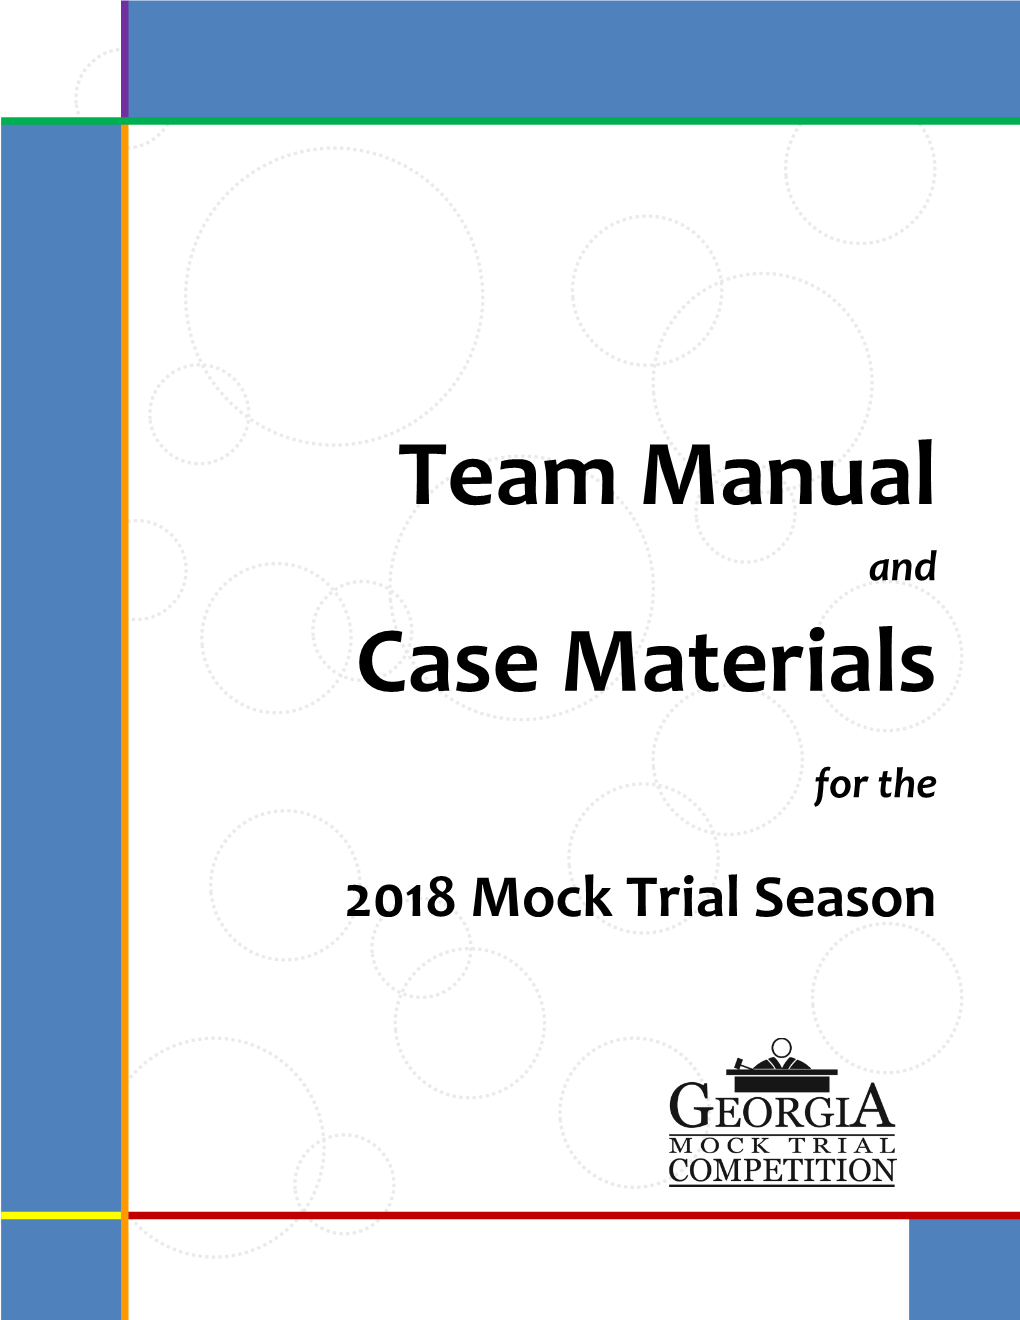 2014 Mock Trial Manual (Team Edition)